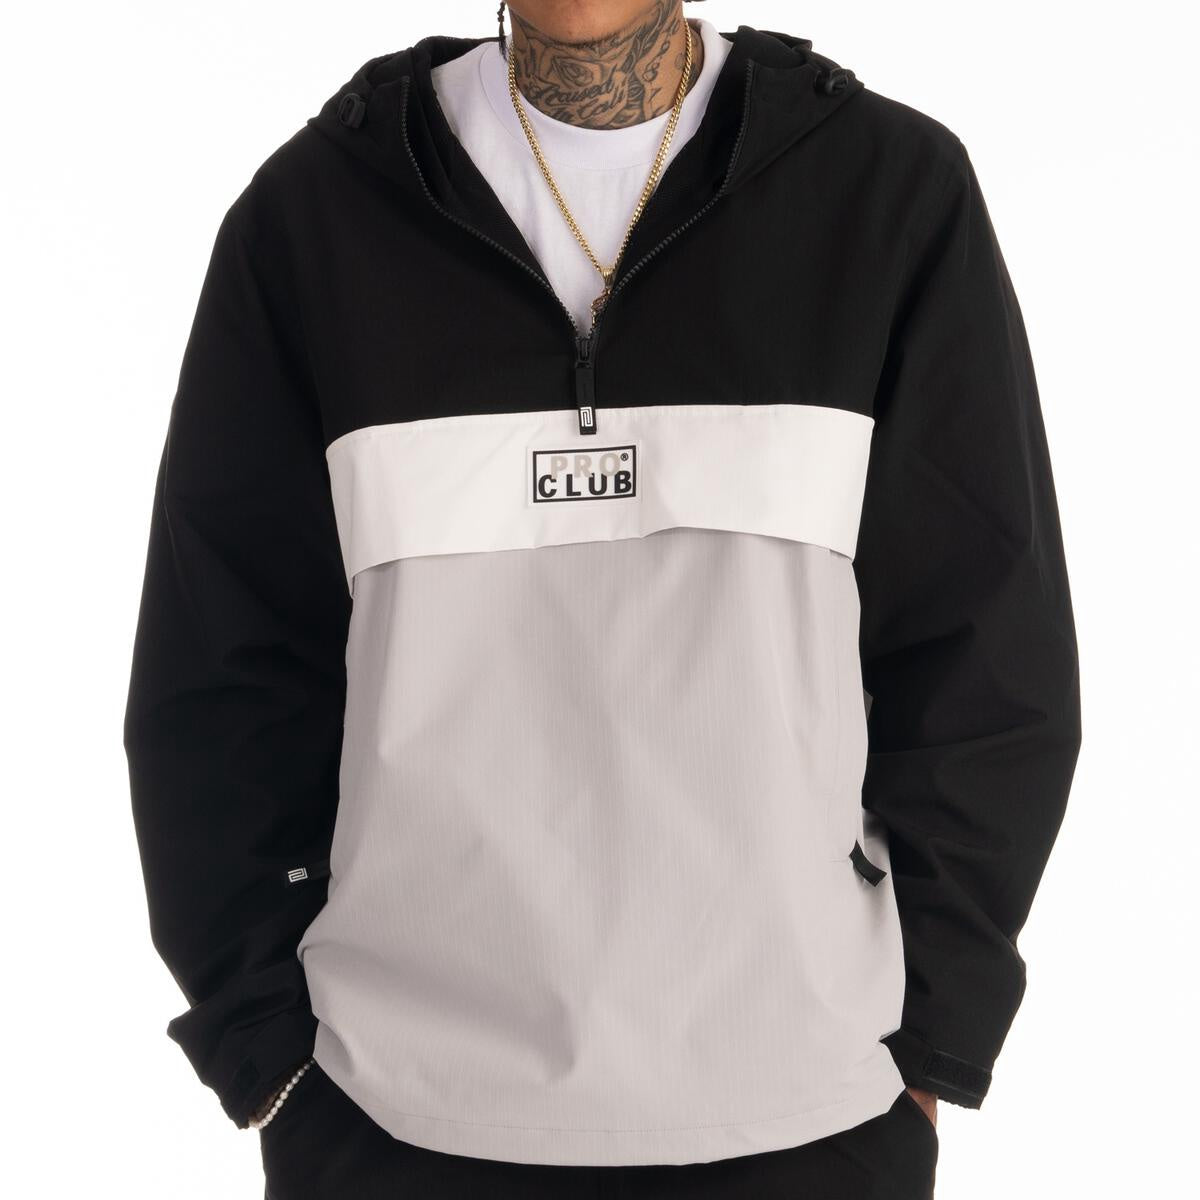 Pro Club Men's Nylon Anorak Pullover Jacket - Black/Gray